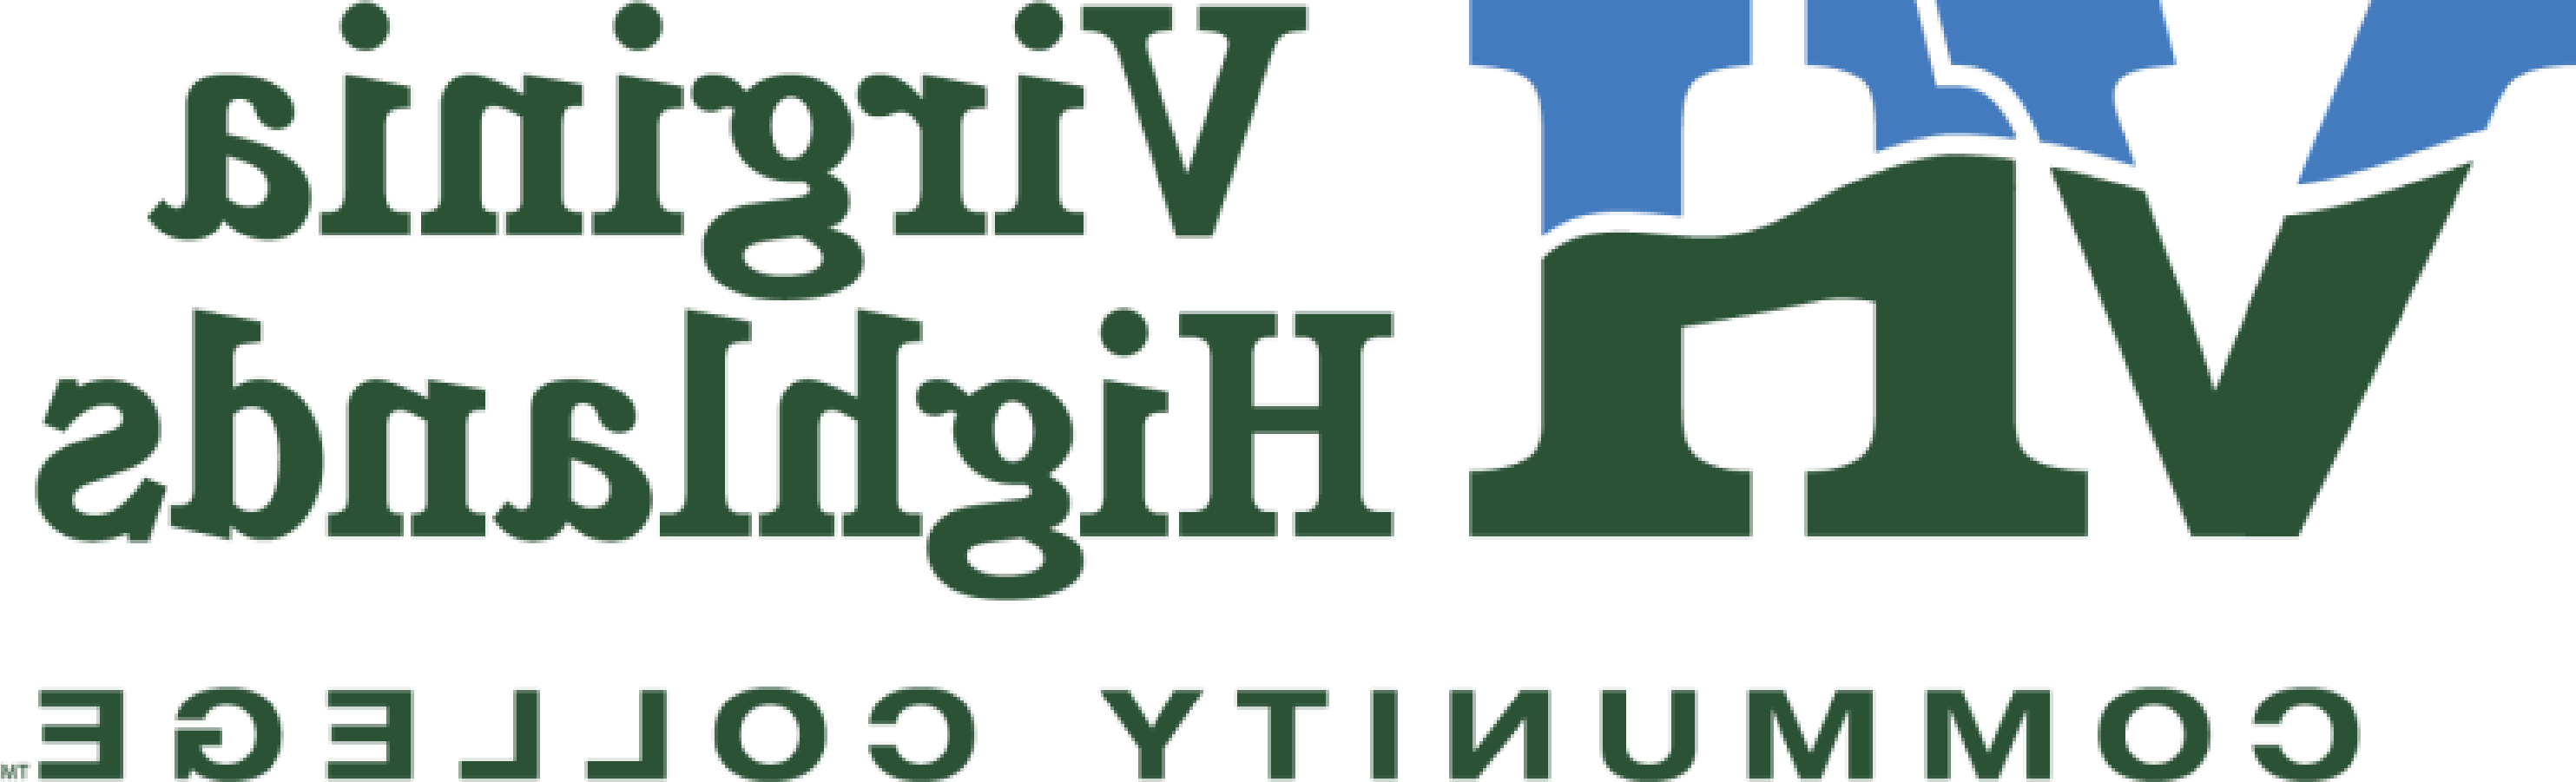 VHCC logo